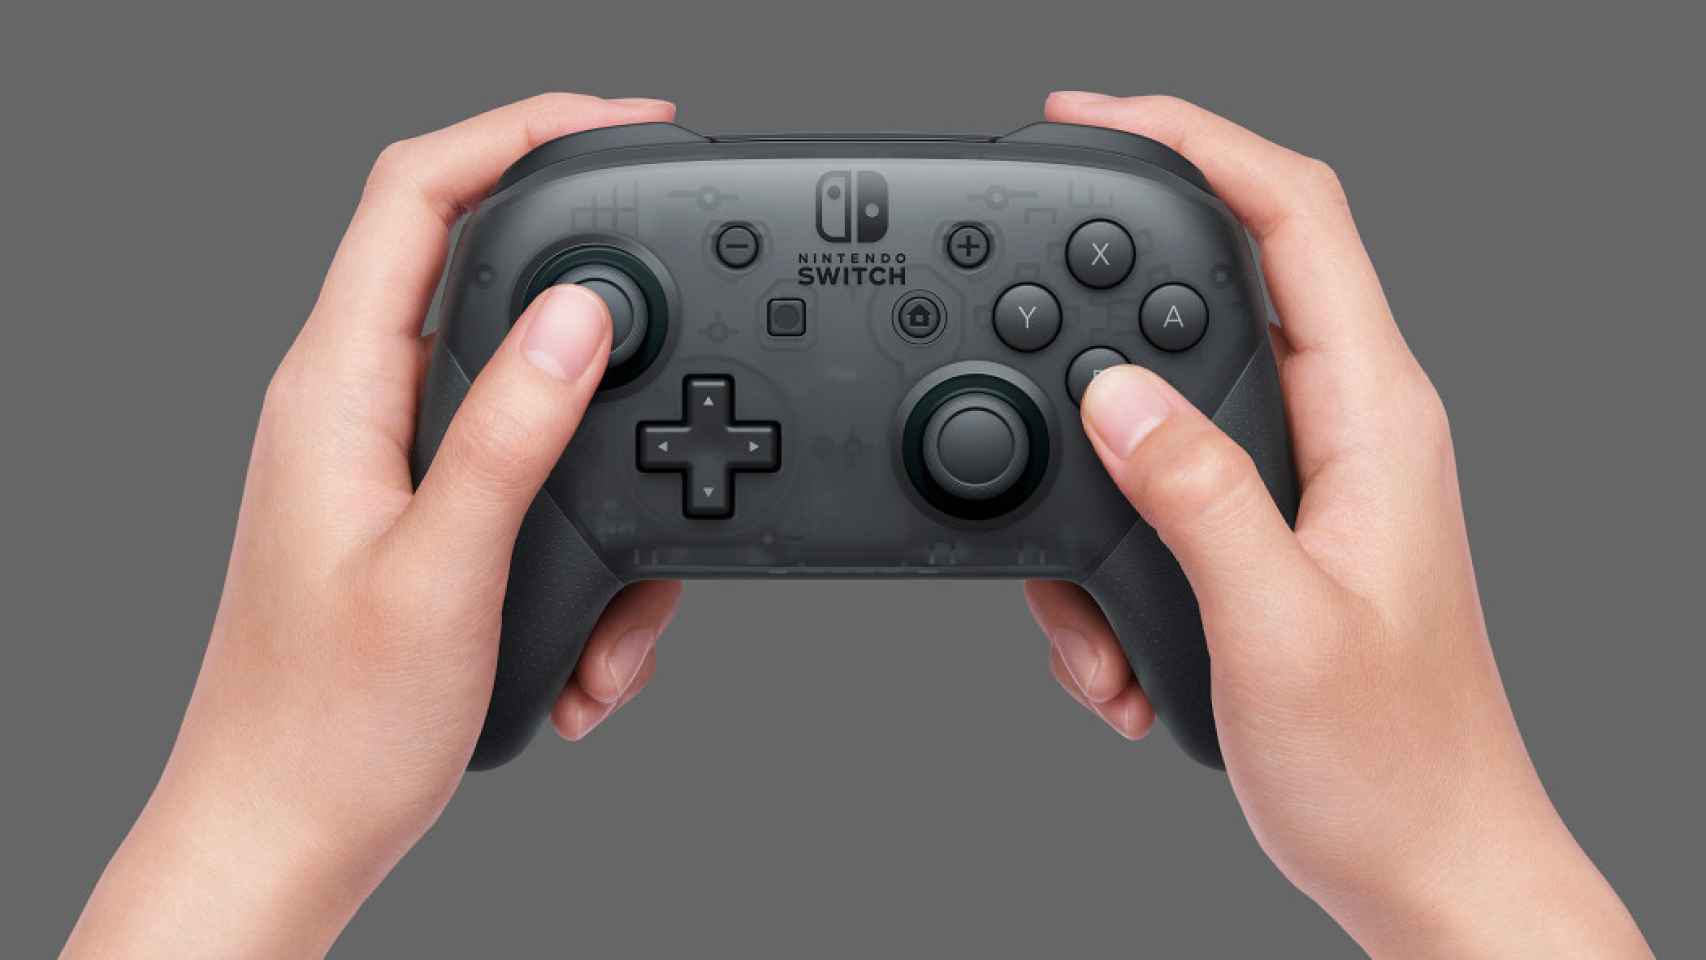 Mando inalámbrico Pro para Nintendo Switch mando a distancia Joypad mando